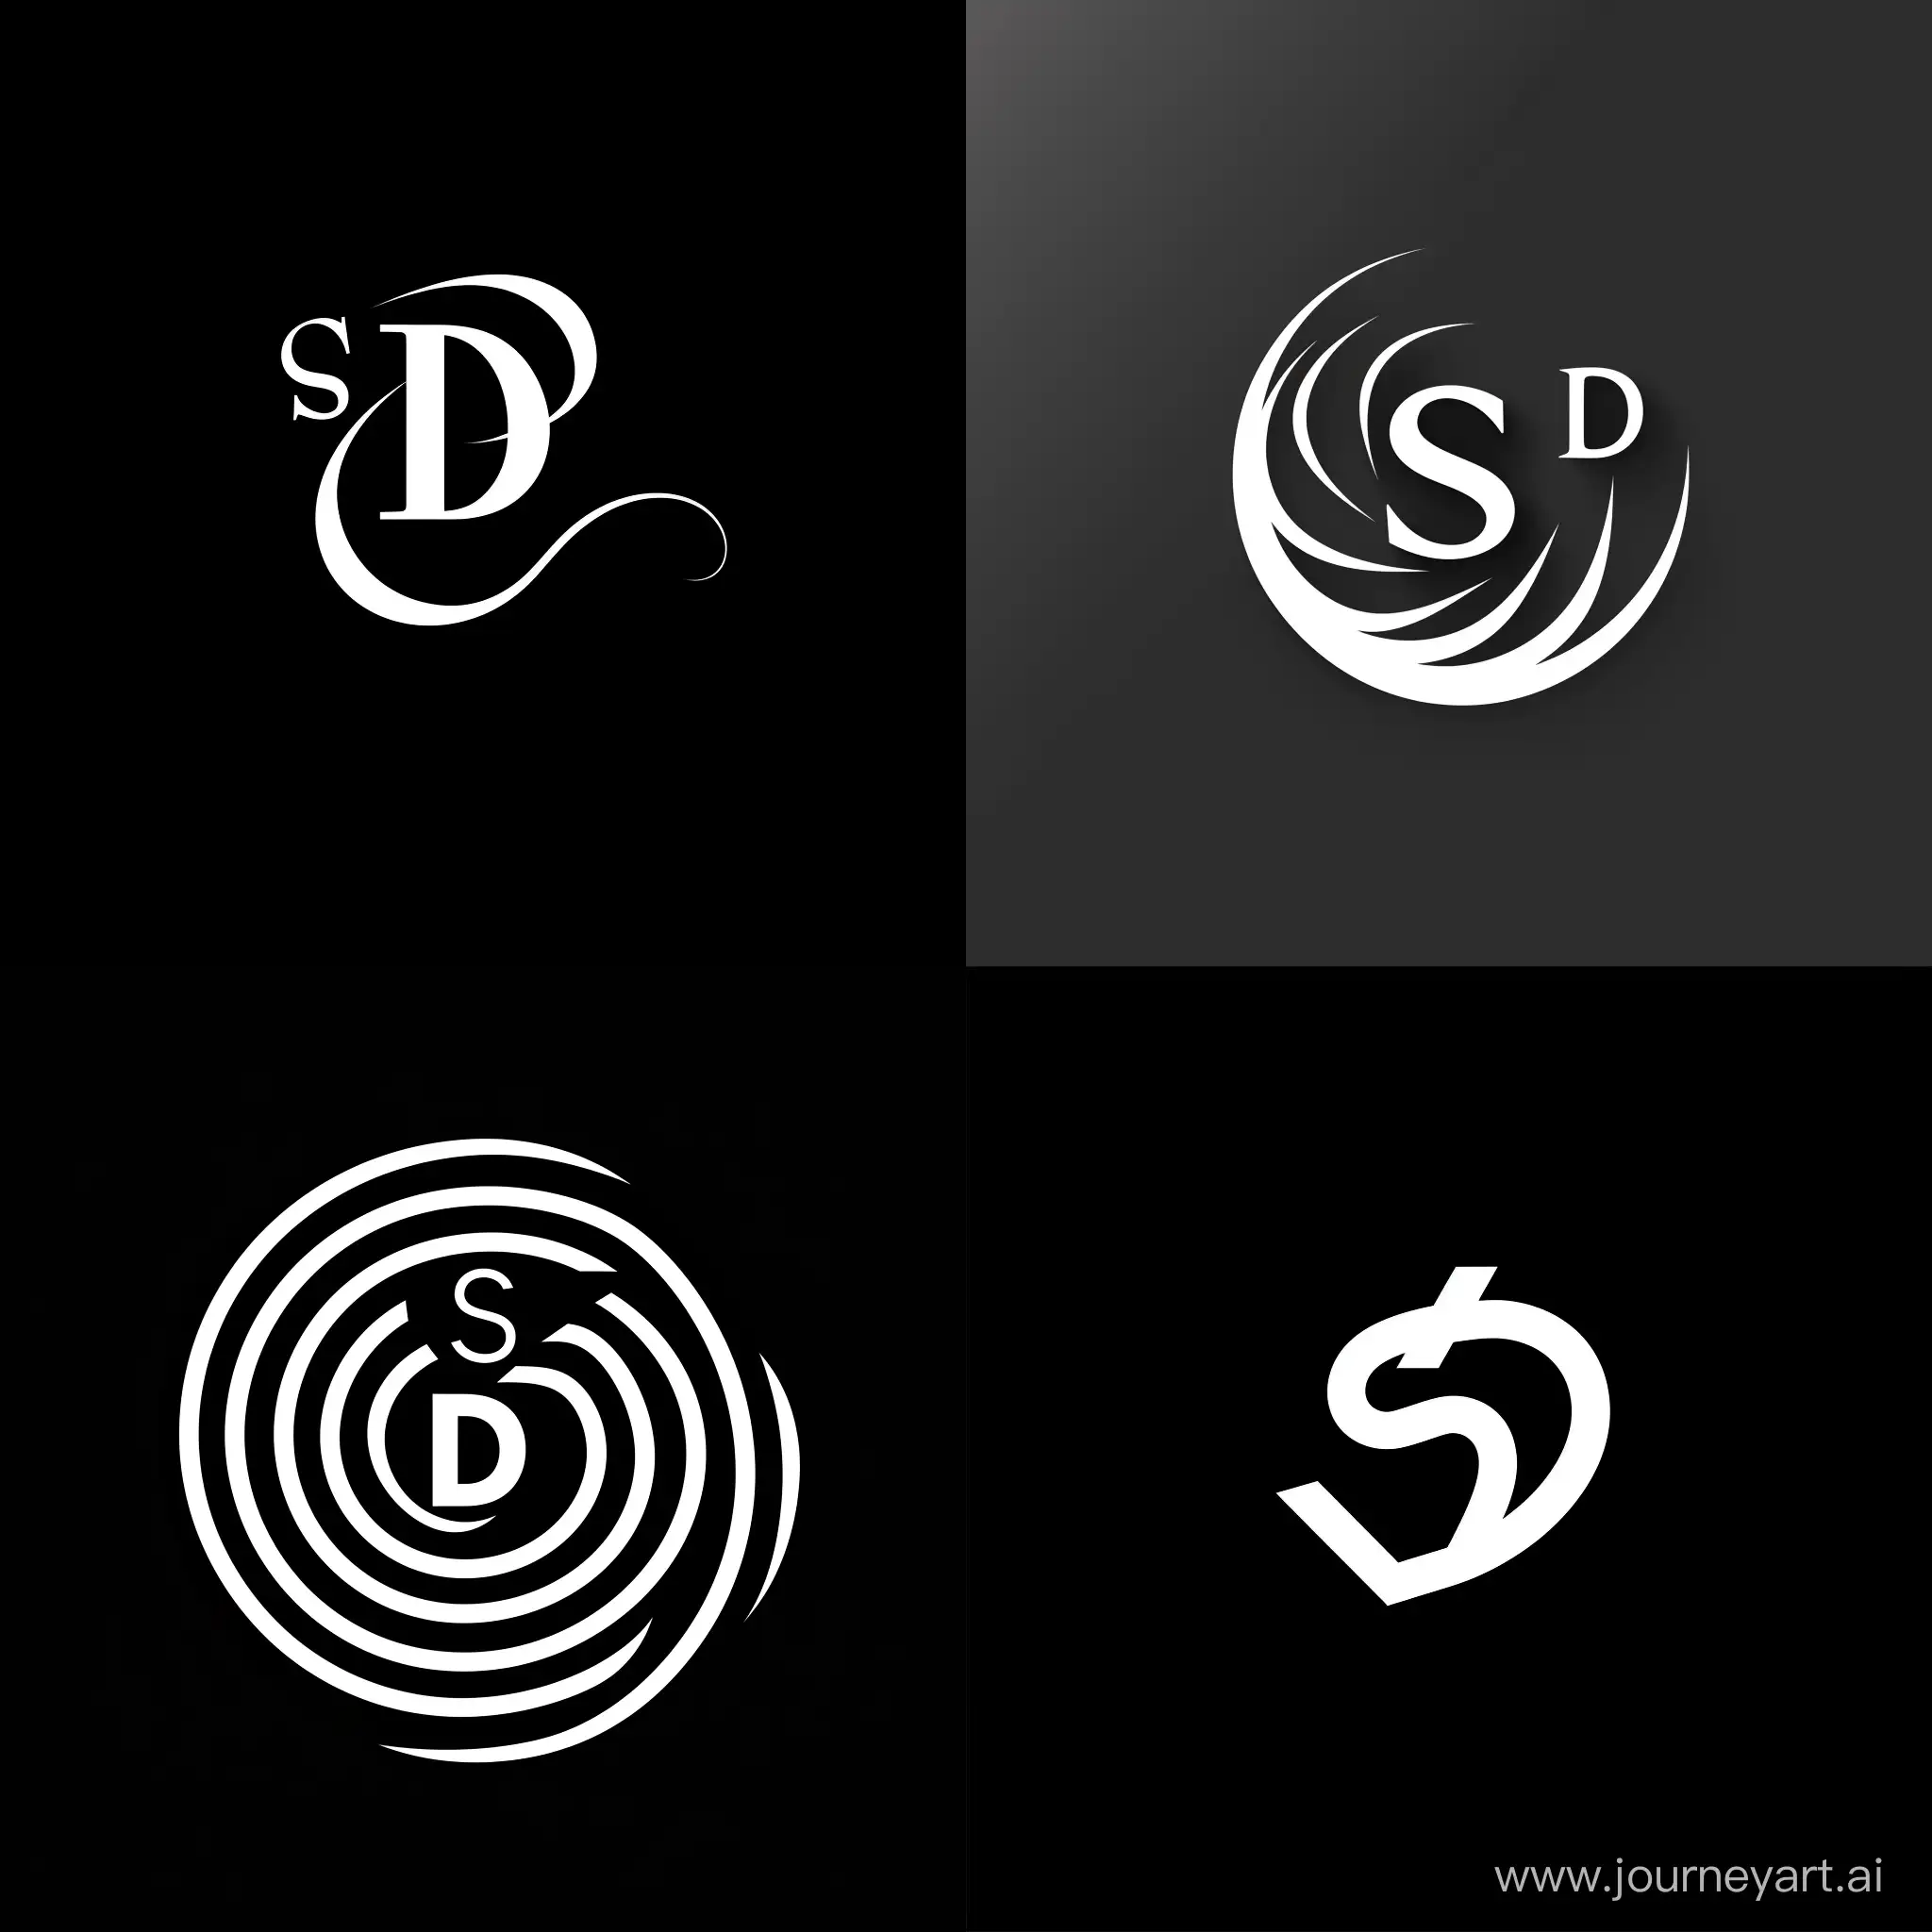 Motivational-SelfDevelopment-Logo-Inspiring-S-and-D-in-Black-and-White